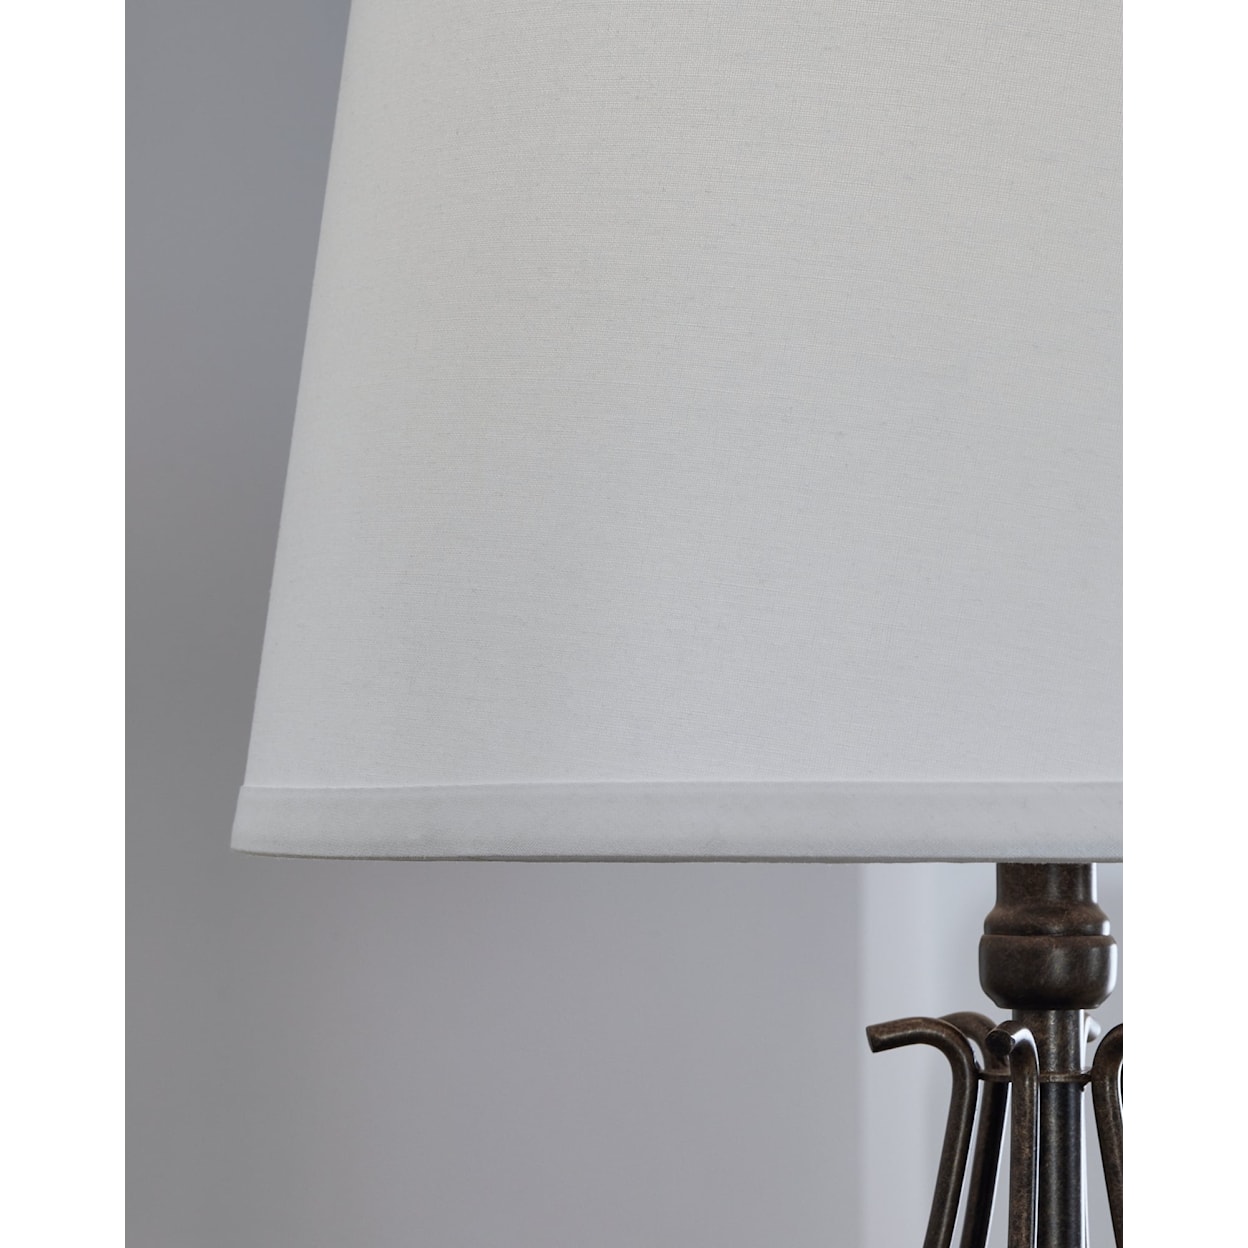 Ashley Furniture Signature Design Brycestone Metal Floor Lamp with 2 Table Lamps